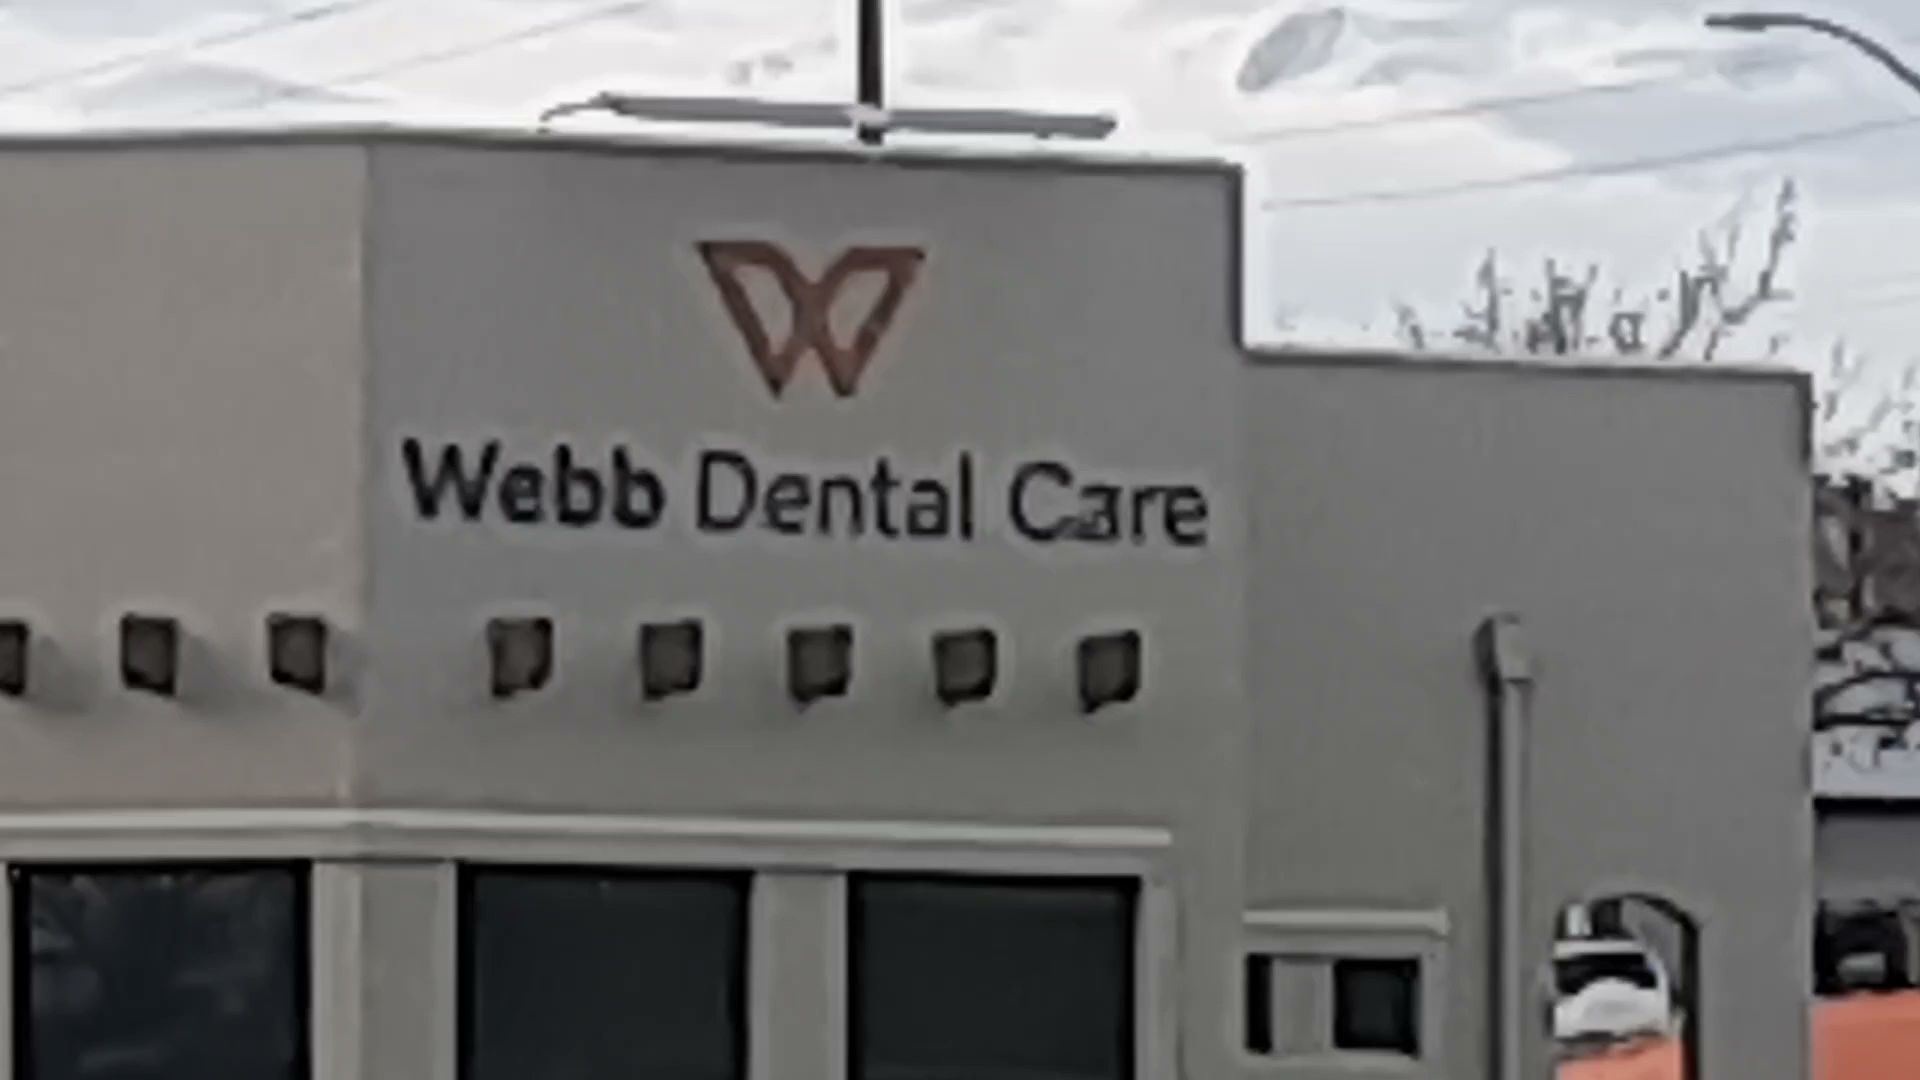 Webb Dental Care 703 Valley Mall Pkwy, East Wenatchee Washington 98802